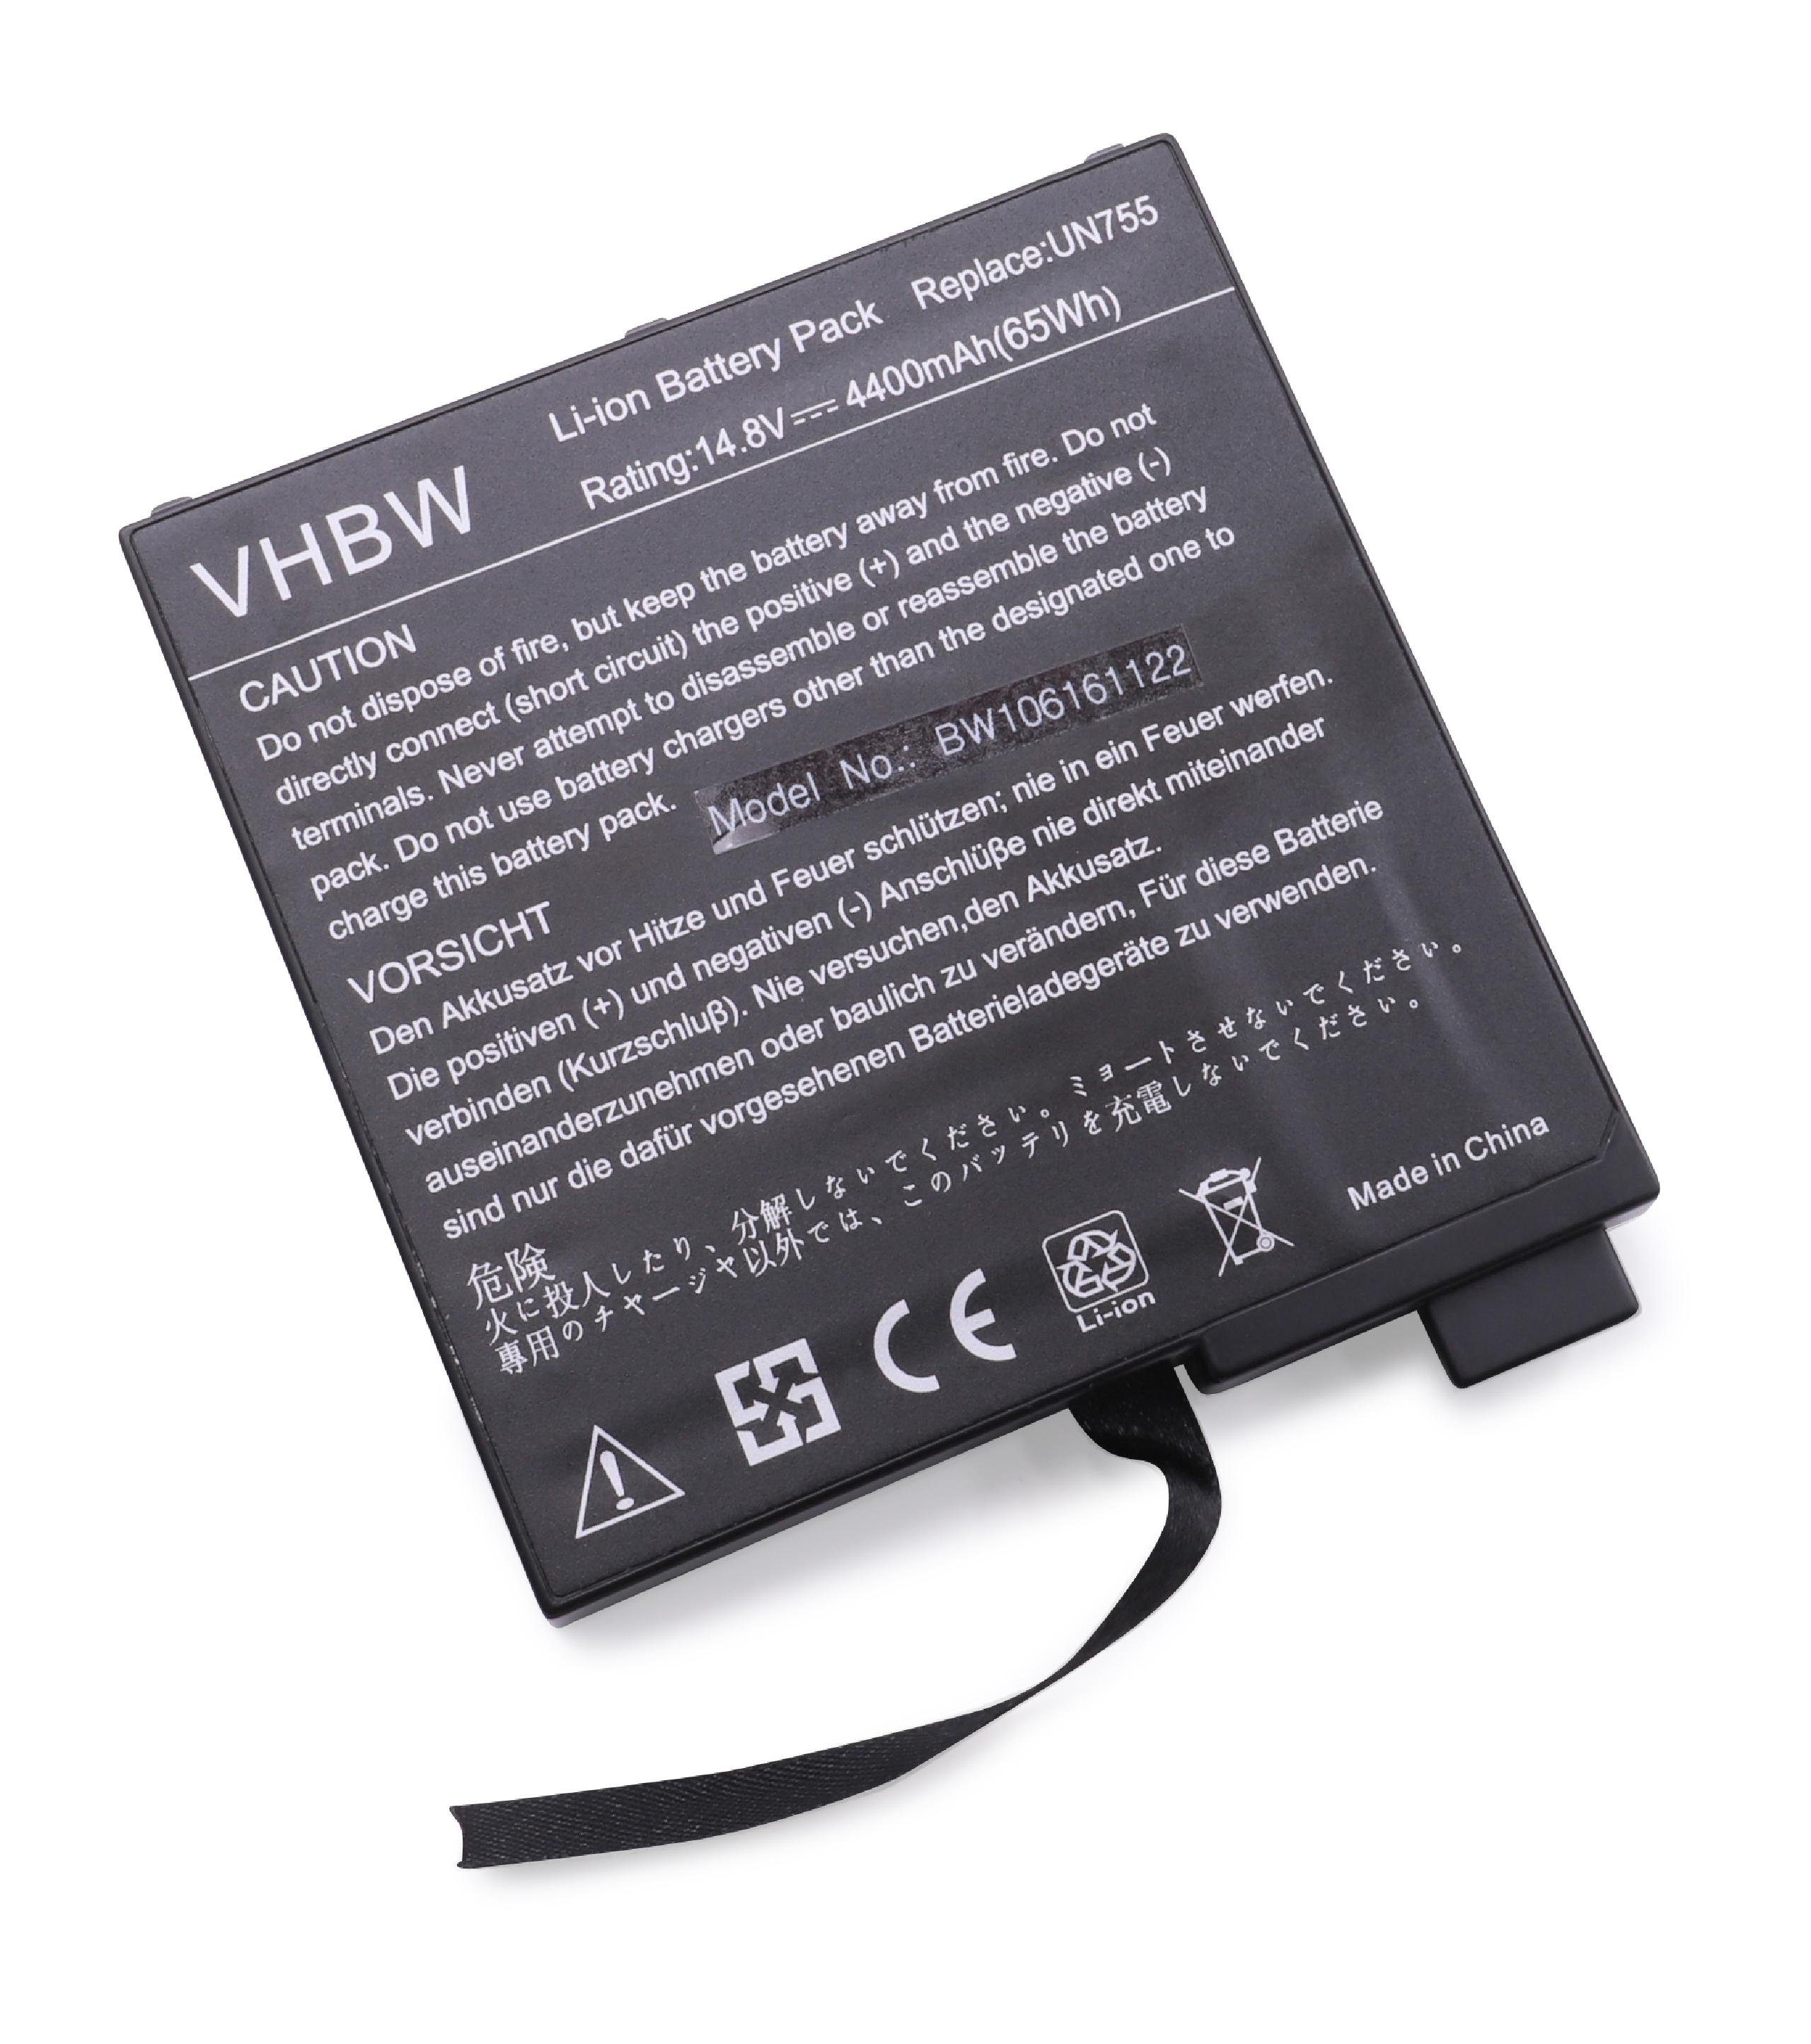 vhbw passend für User Easy 755II8, 755IN Notebook / Netbook (4400mAh, 14,8V, Li-Ion) Laptop-Akku 4400 mAh